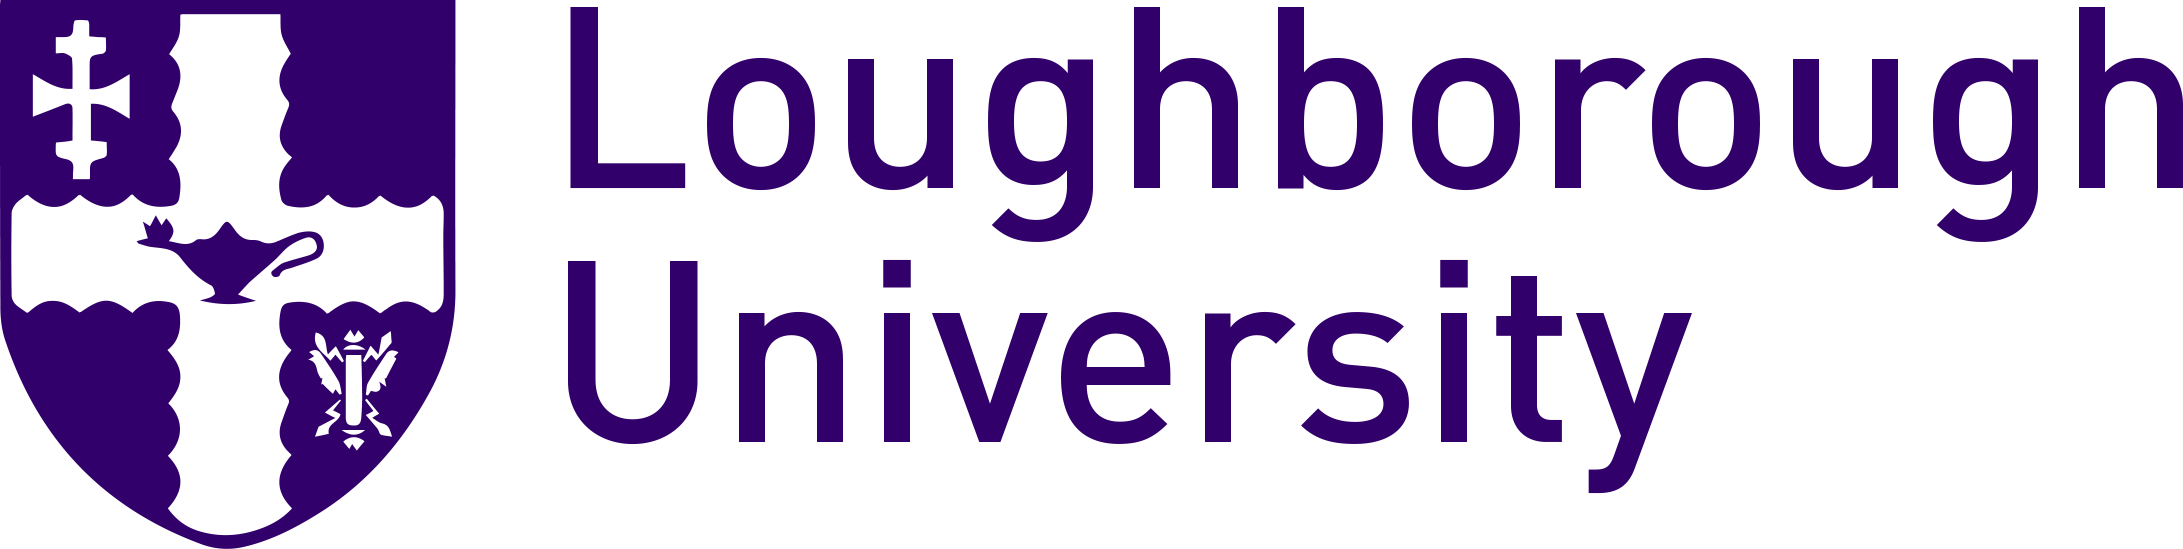 Loughborough University company logo